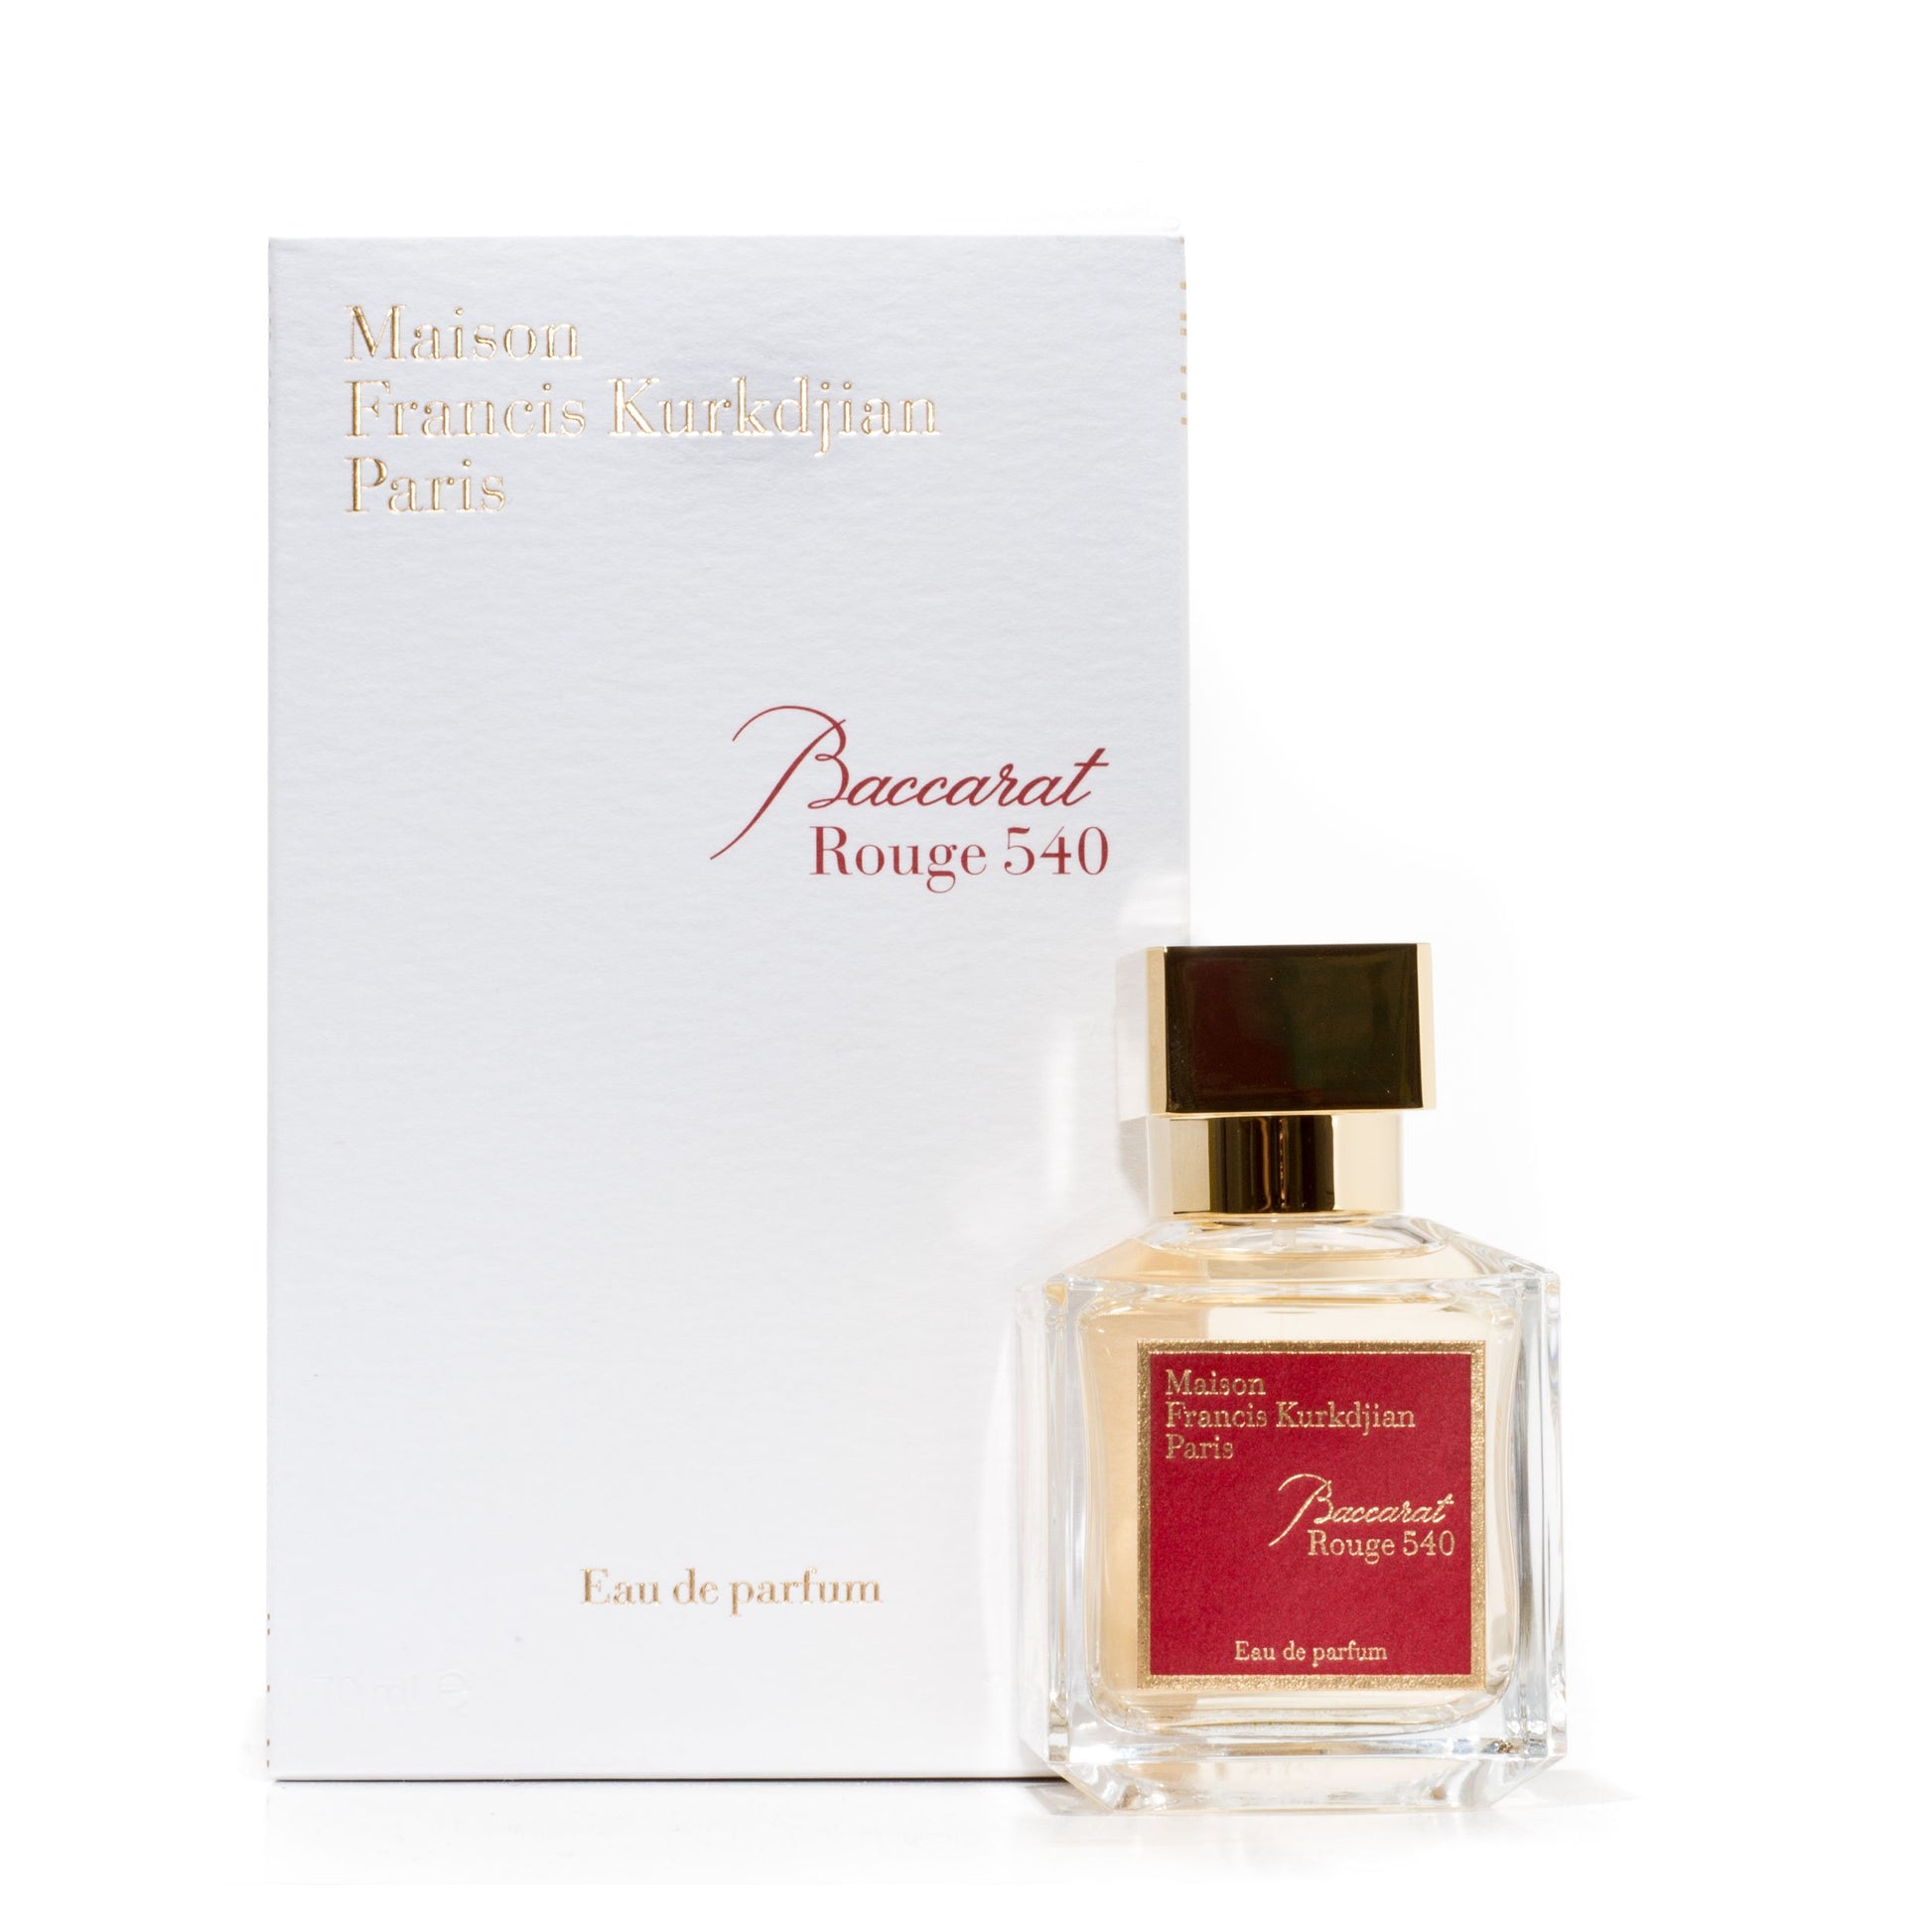 Baccarat Rouge 540 Eau de Parfum Spray for Women and Men by Maison Francis Kurkdjian, Product image 2